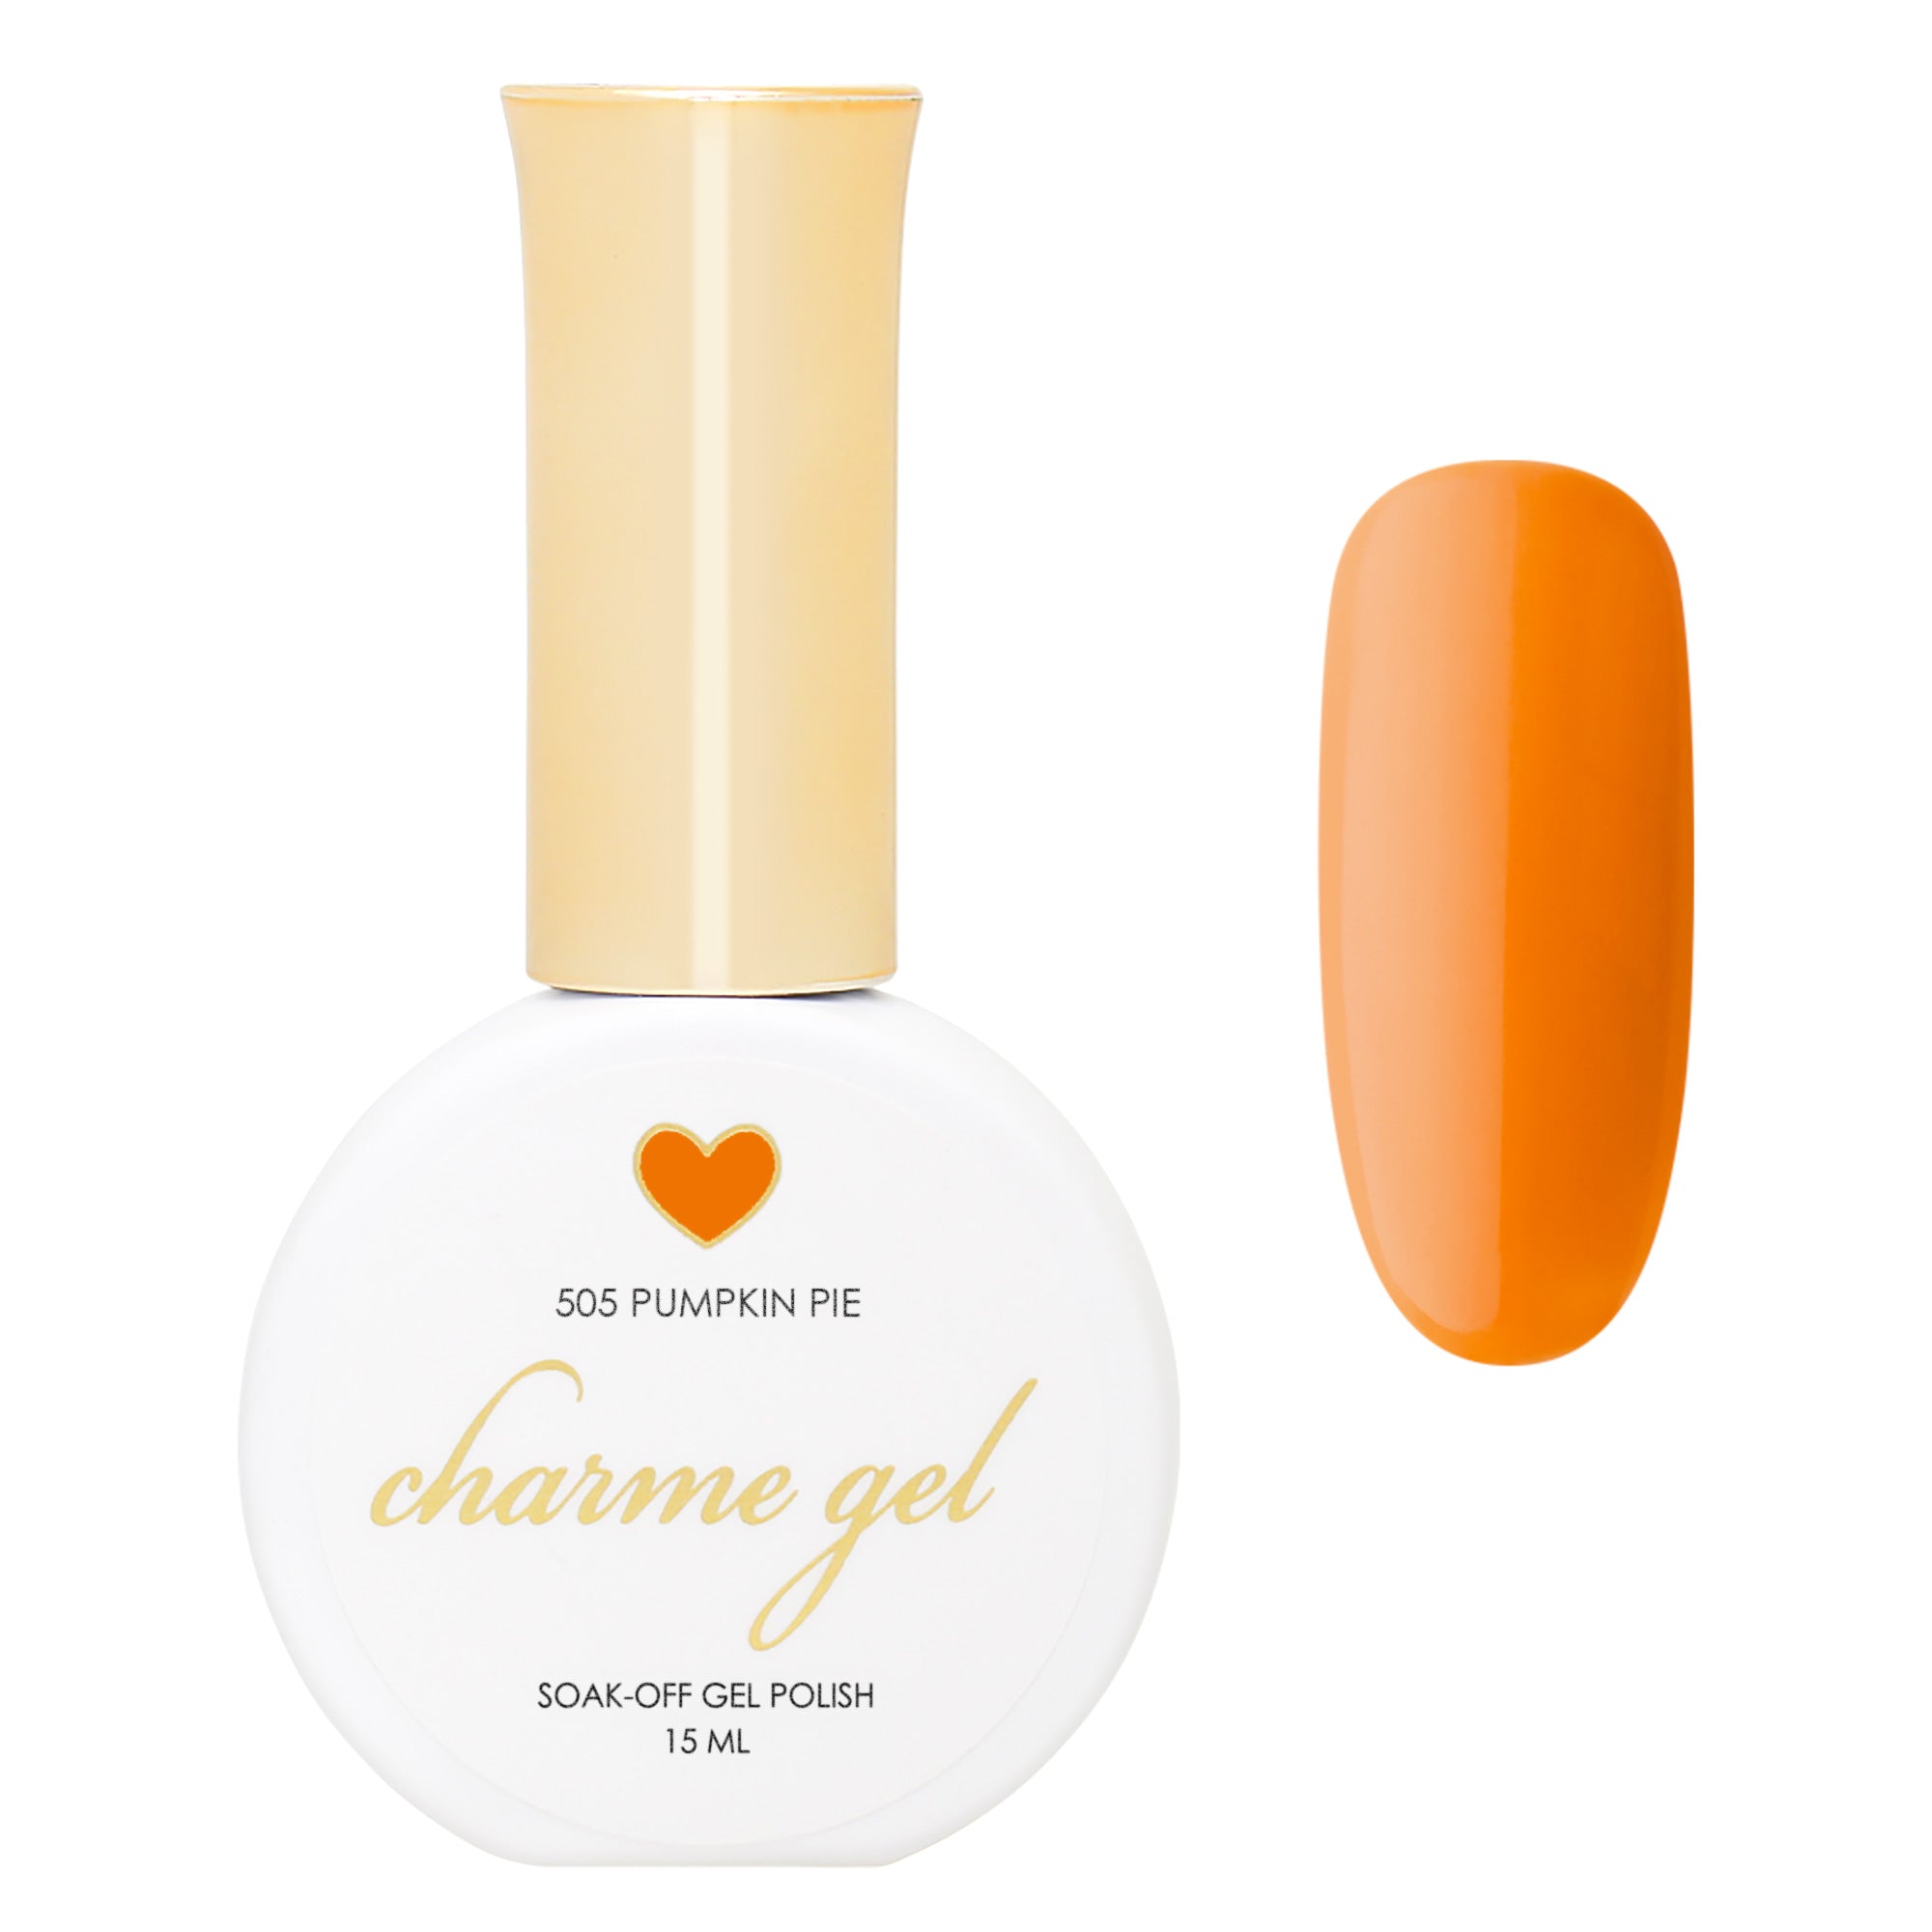 Charme Gel / 505 Pumpkin Pie Bright Orange Nail Polish Cozy Fall 2022